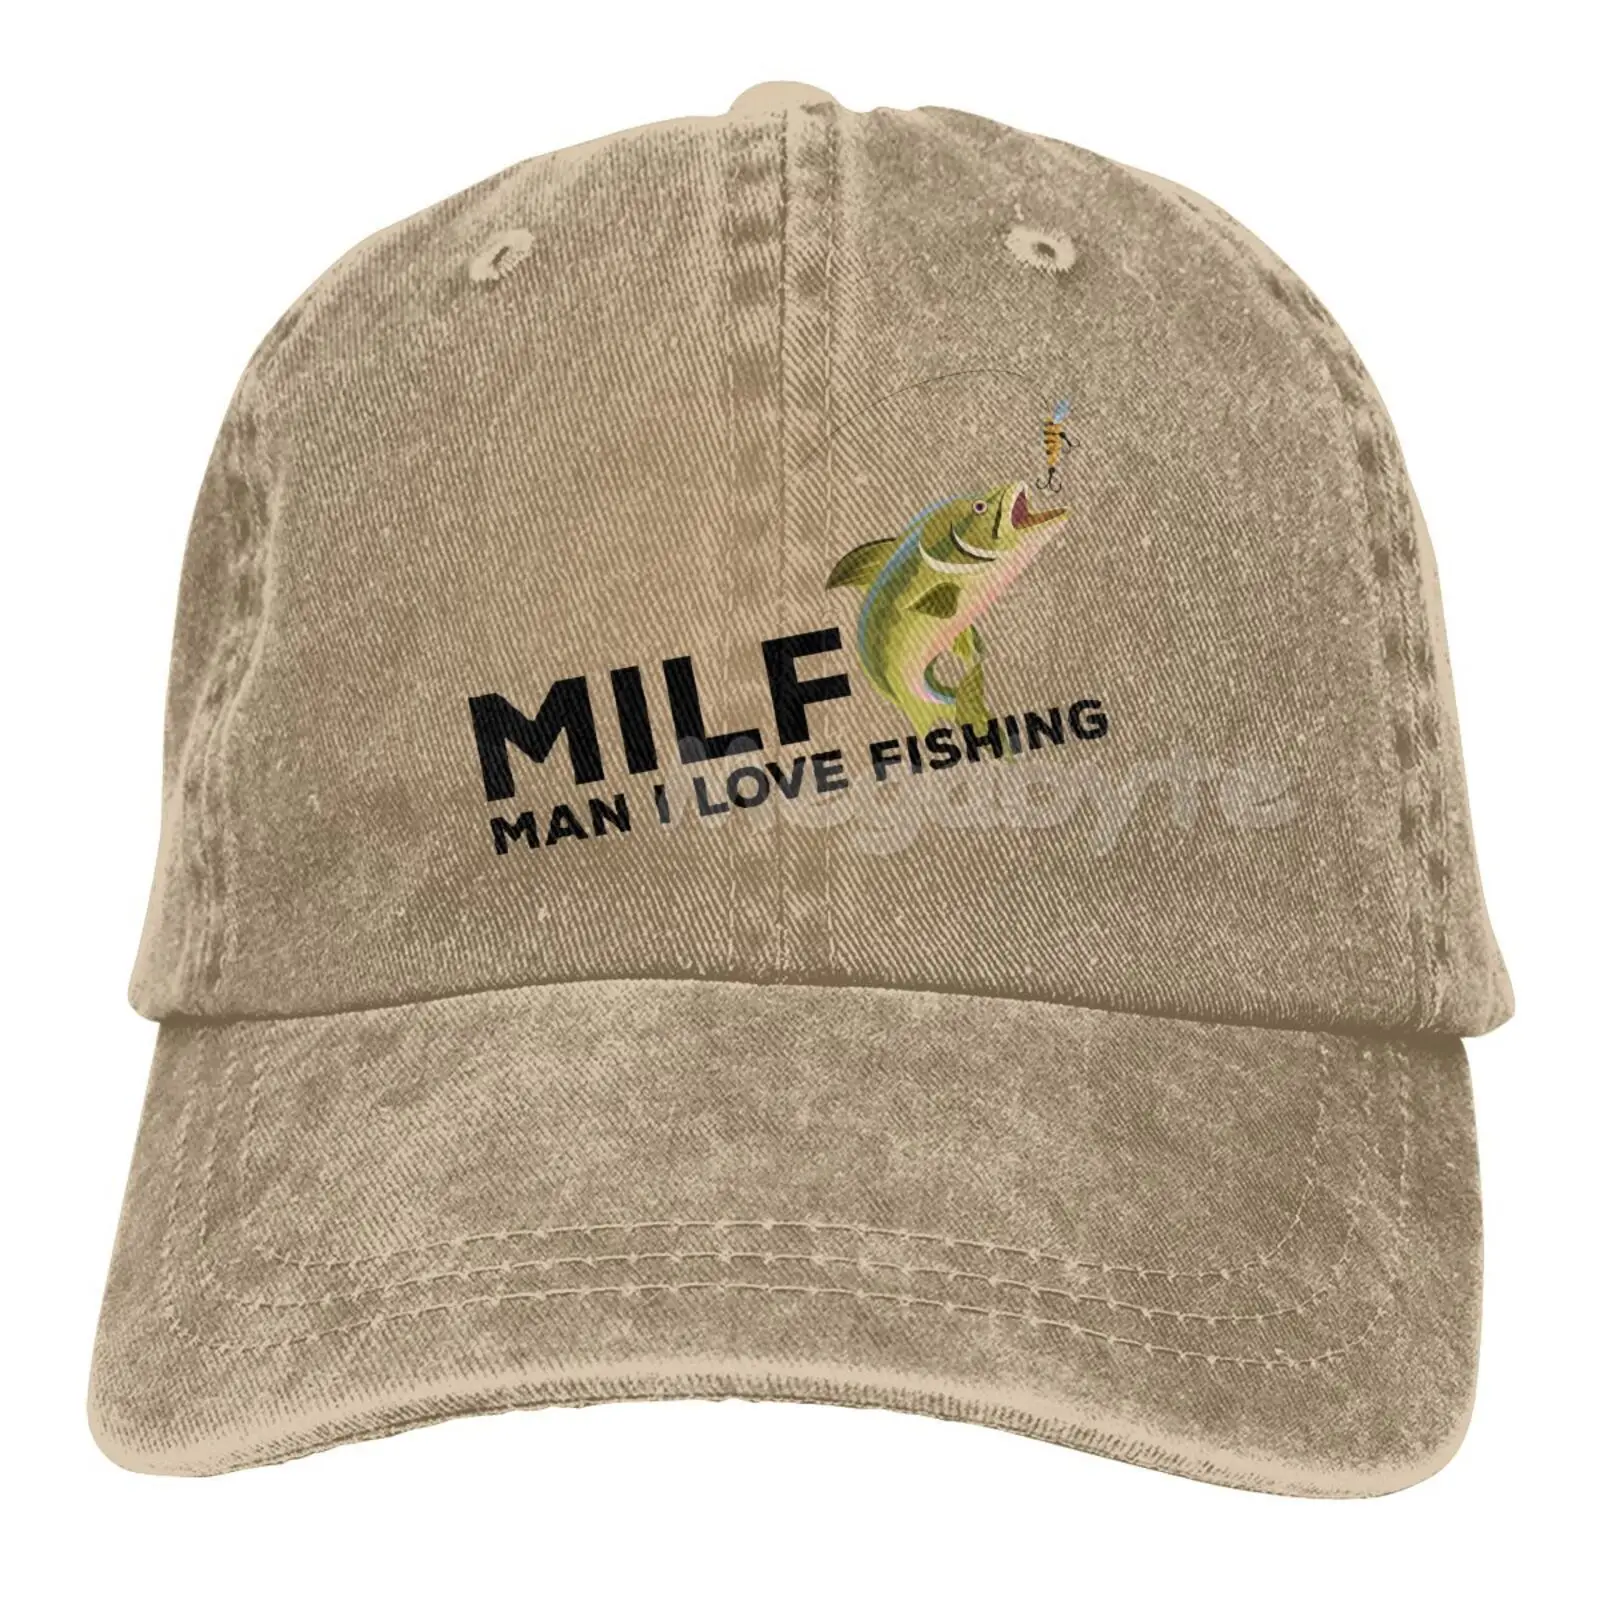 

Milf Man. I Love Fishing Hat Men Women Adjustable Trucker Fashion Washed Denim Caps for Outdoor Black Baseball Cap